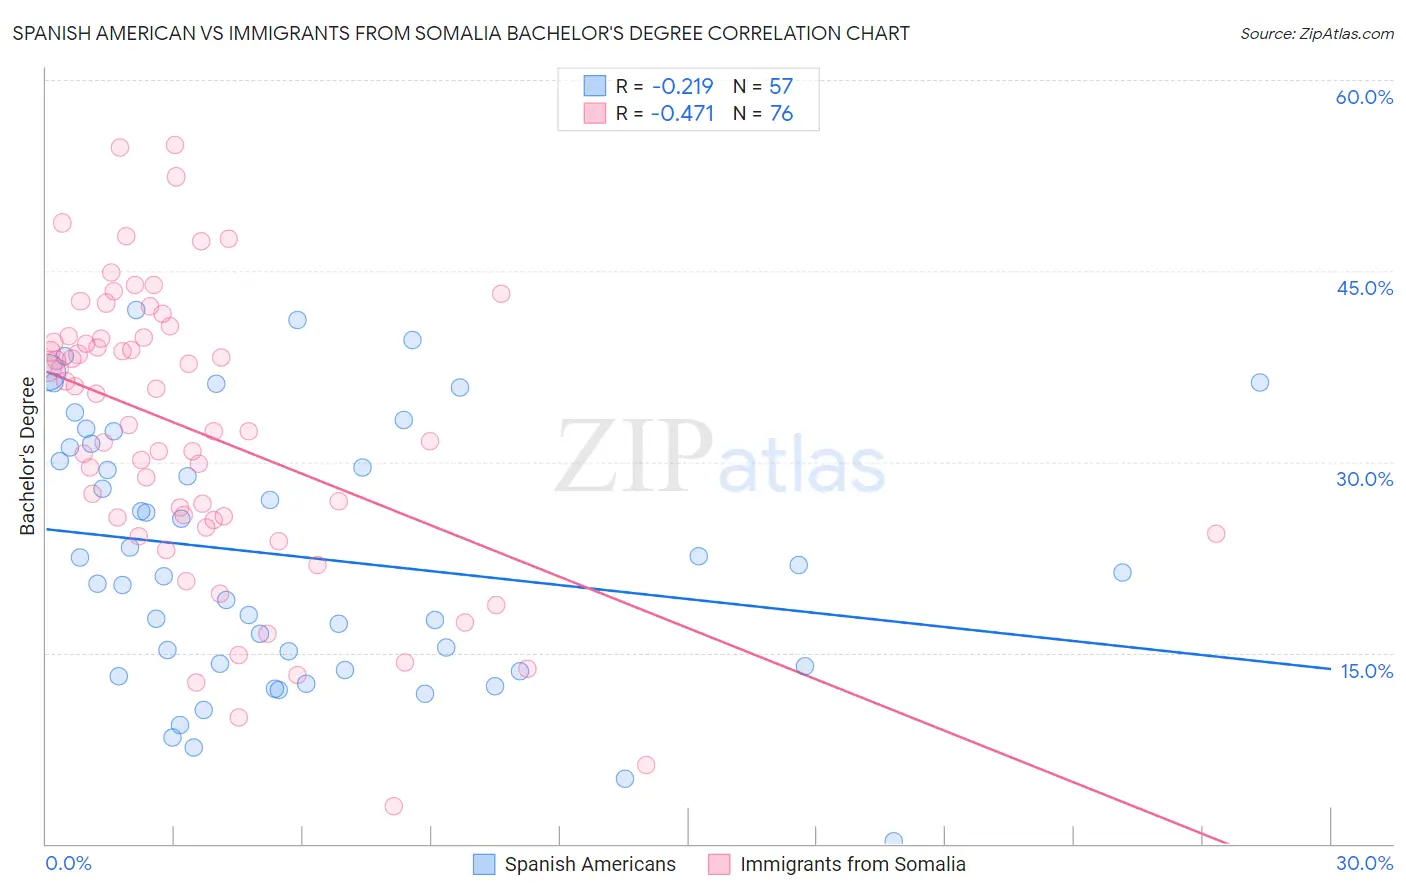 Spanish American vs Immigrants from Somalia Bachelor's Degree